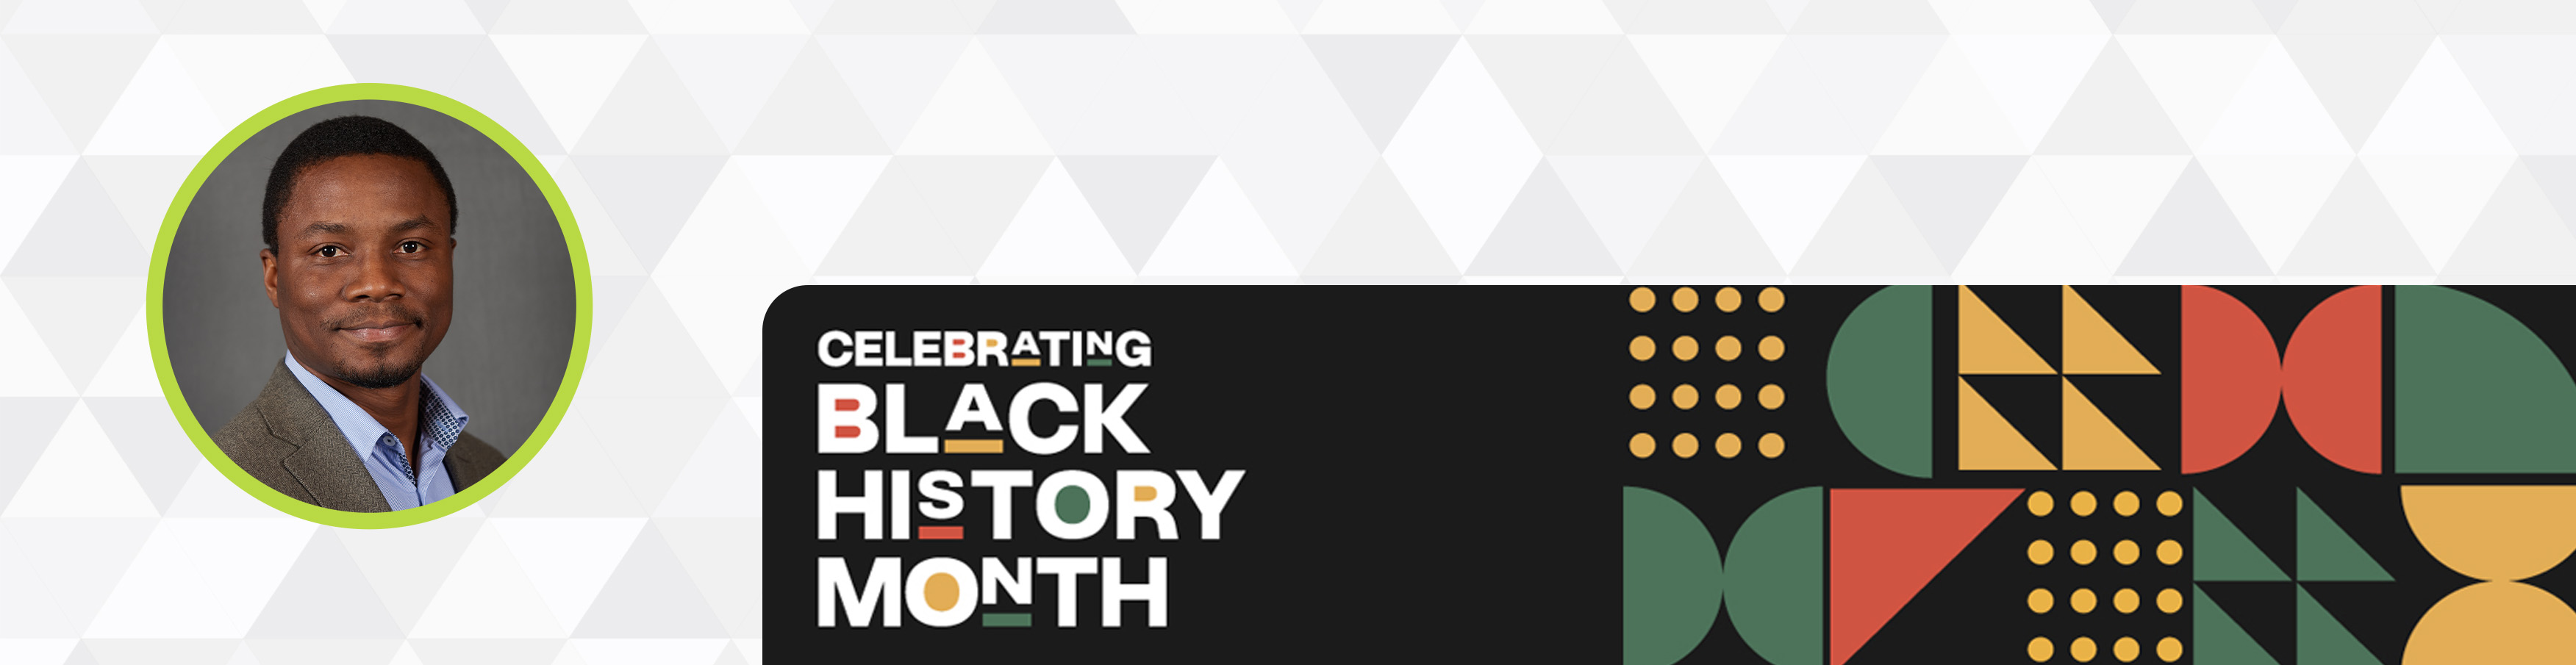 Black-history-month